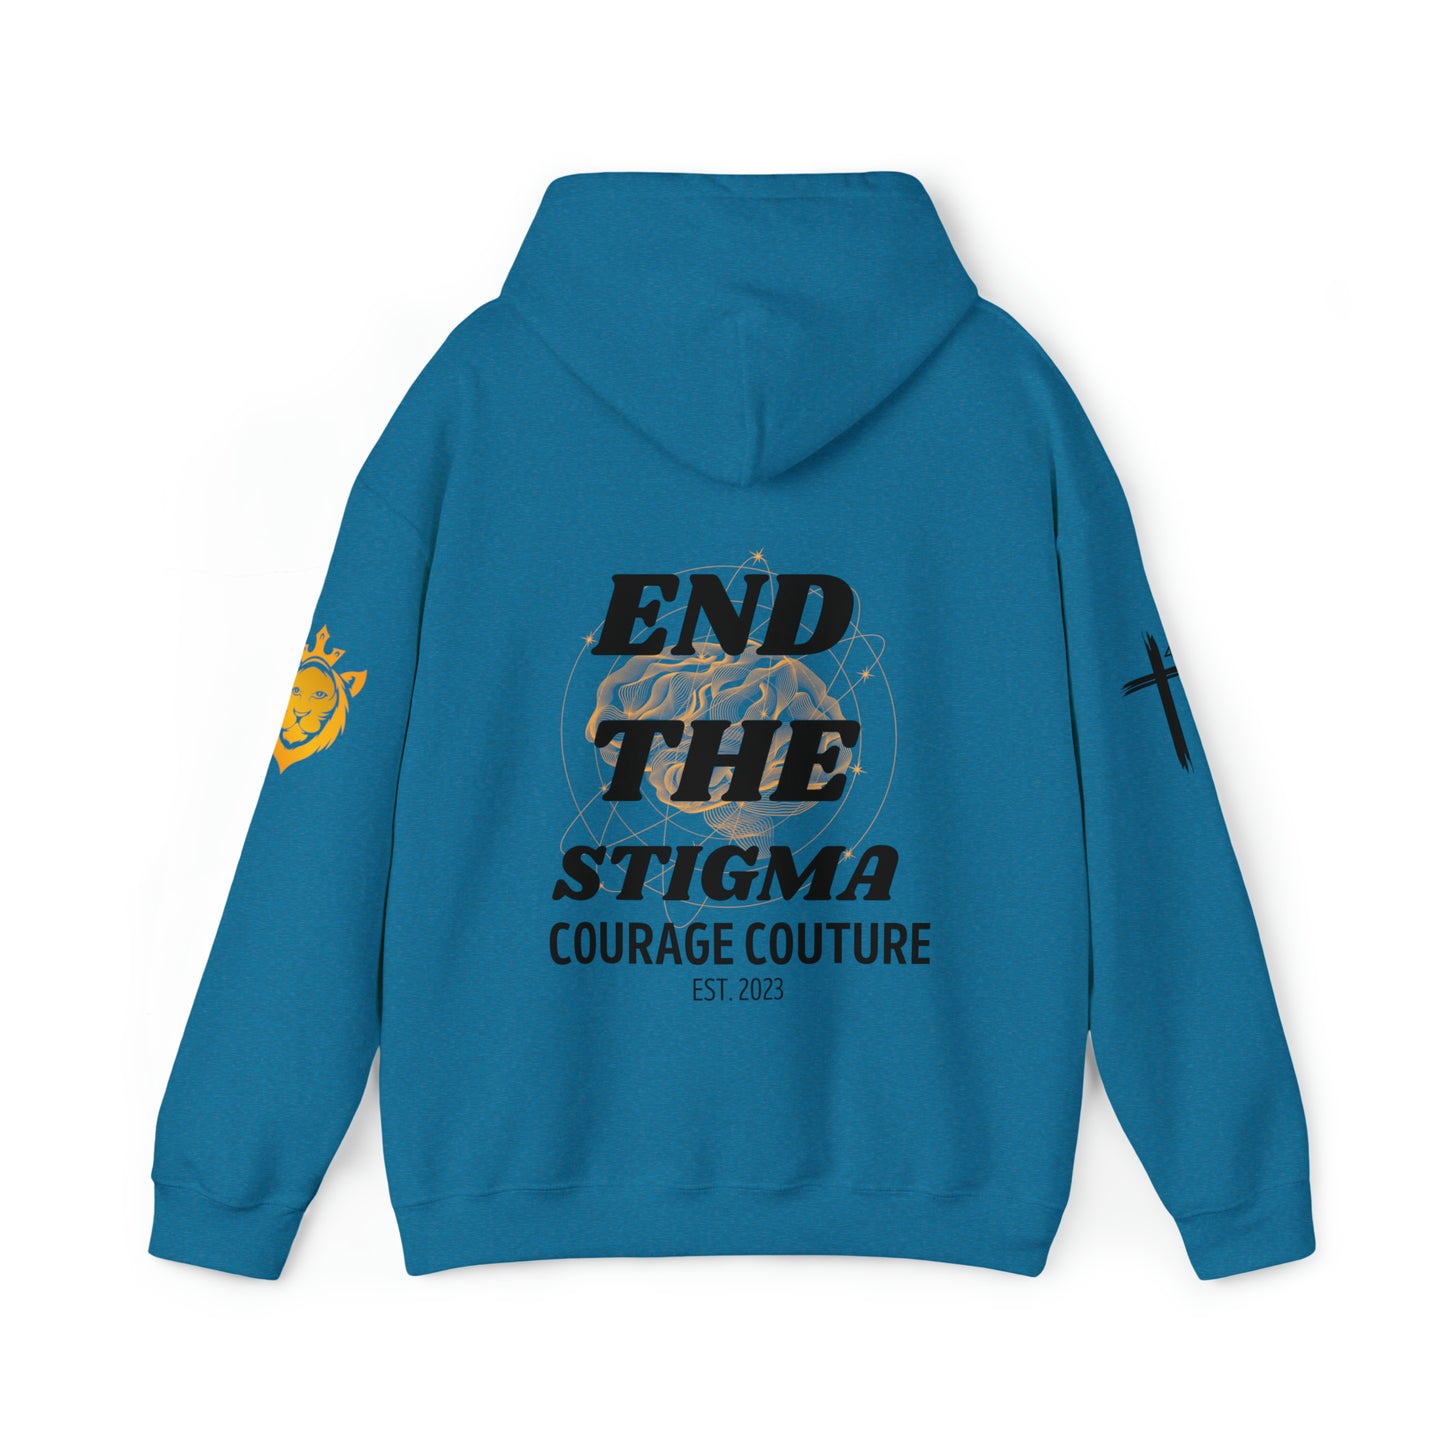 End the Stigma Hooded Sweatshirt